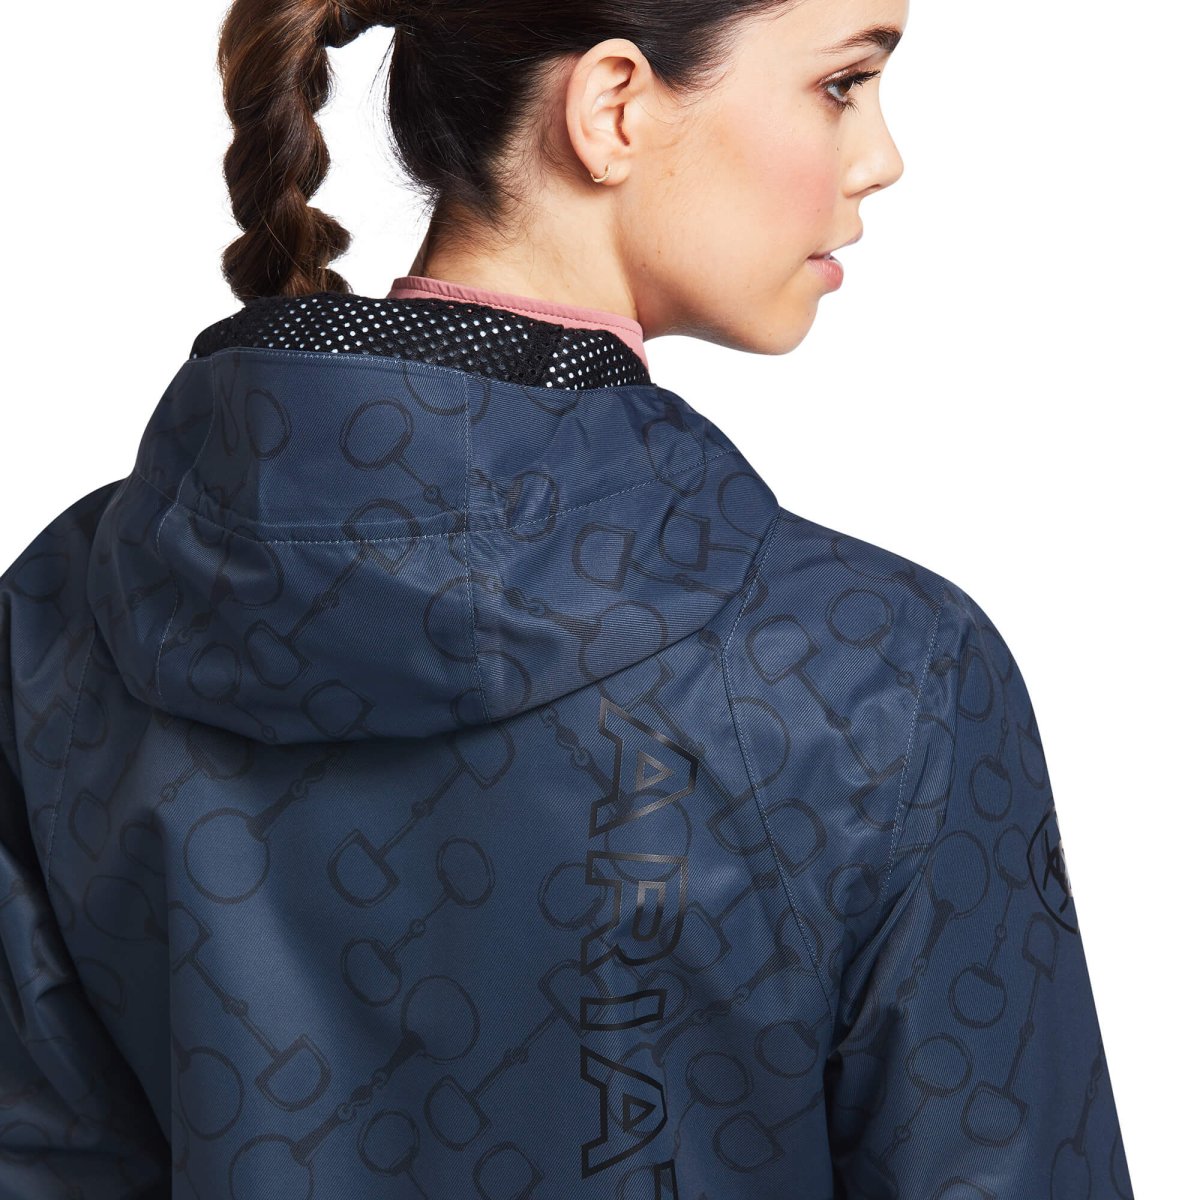 Ariat Womens Spectator Waterproof Jacket - Blue Nights Bit Print - Extra Small